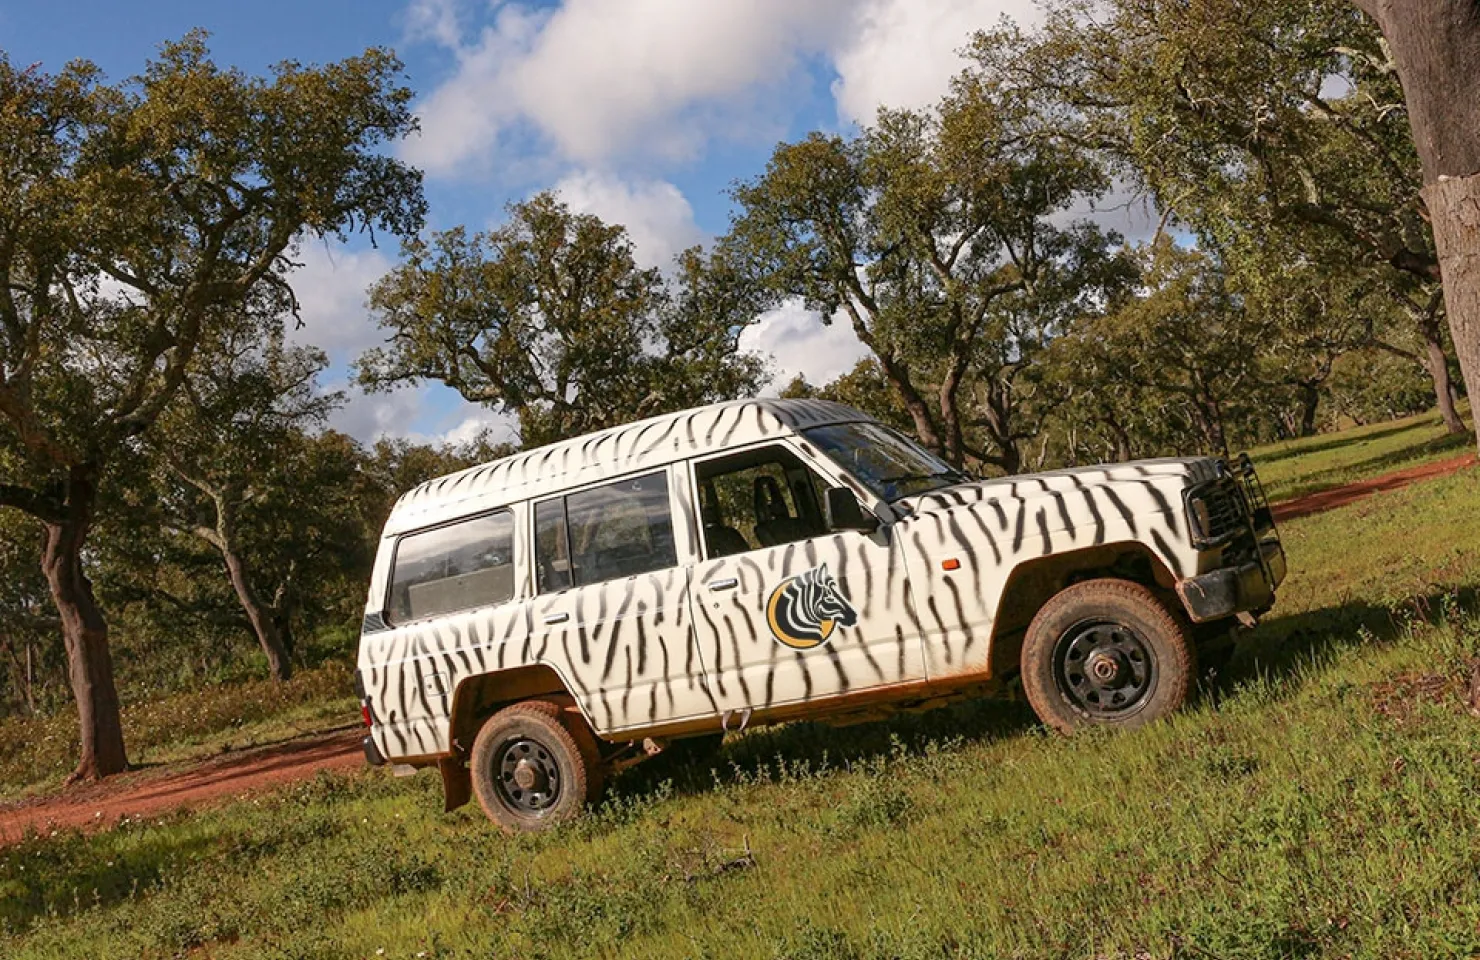 Full-Day Jeep Safari Adventure by Zebra Safari - Top 10 Activities in Albufeira